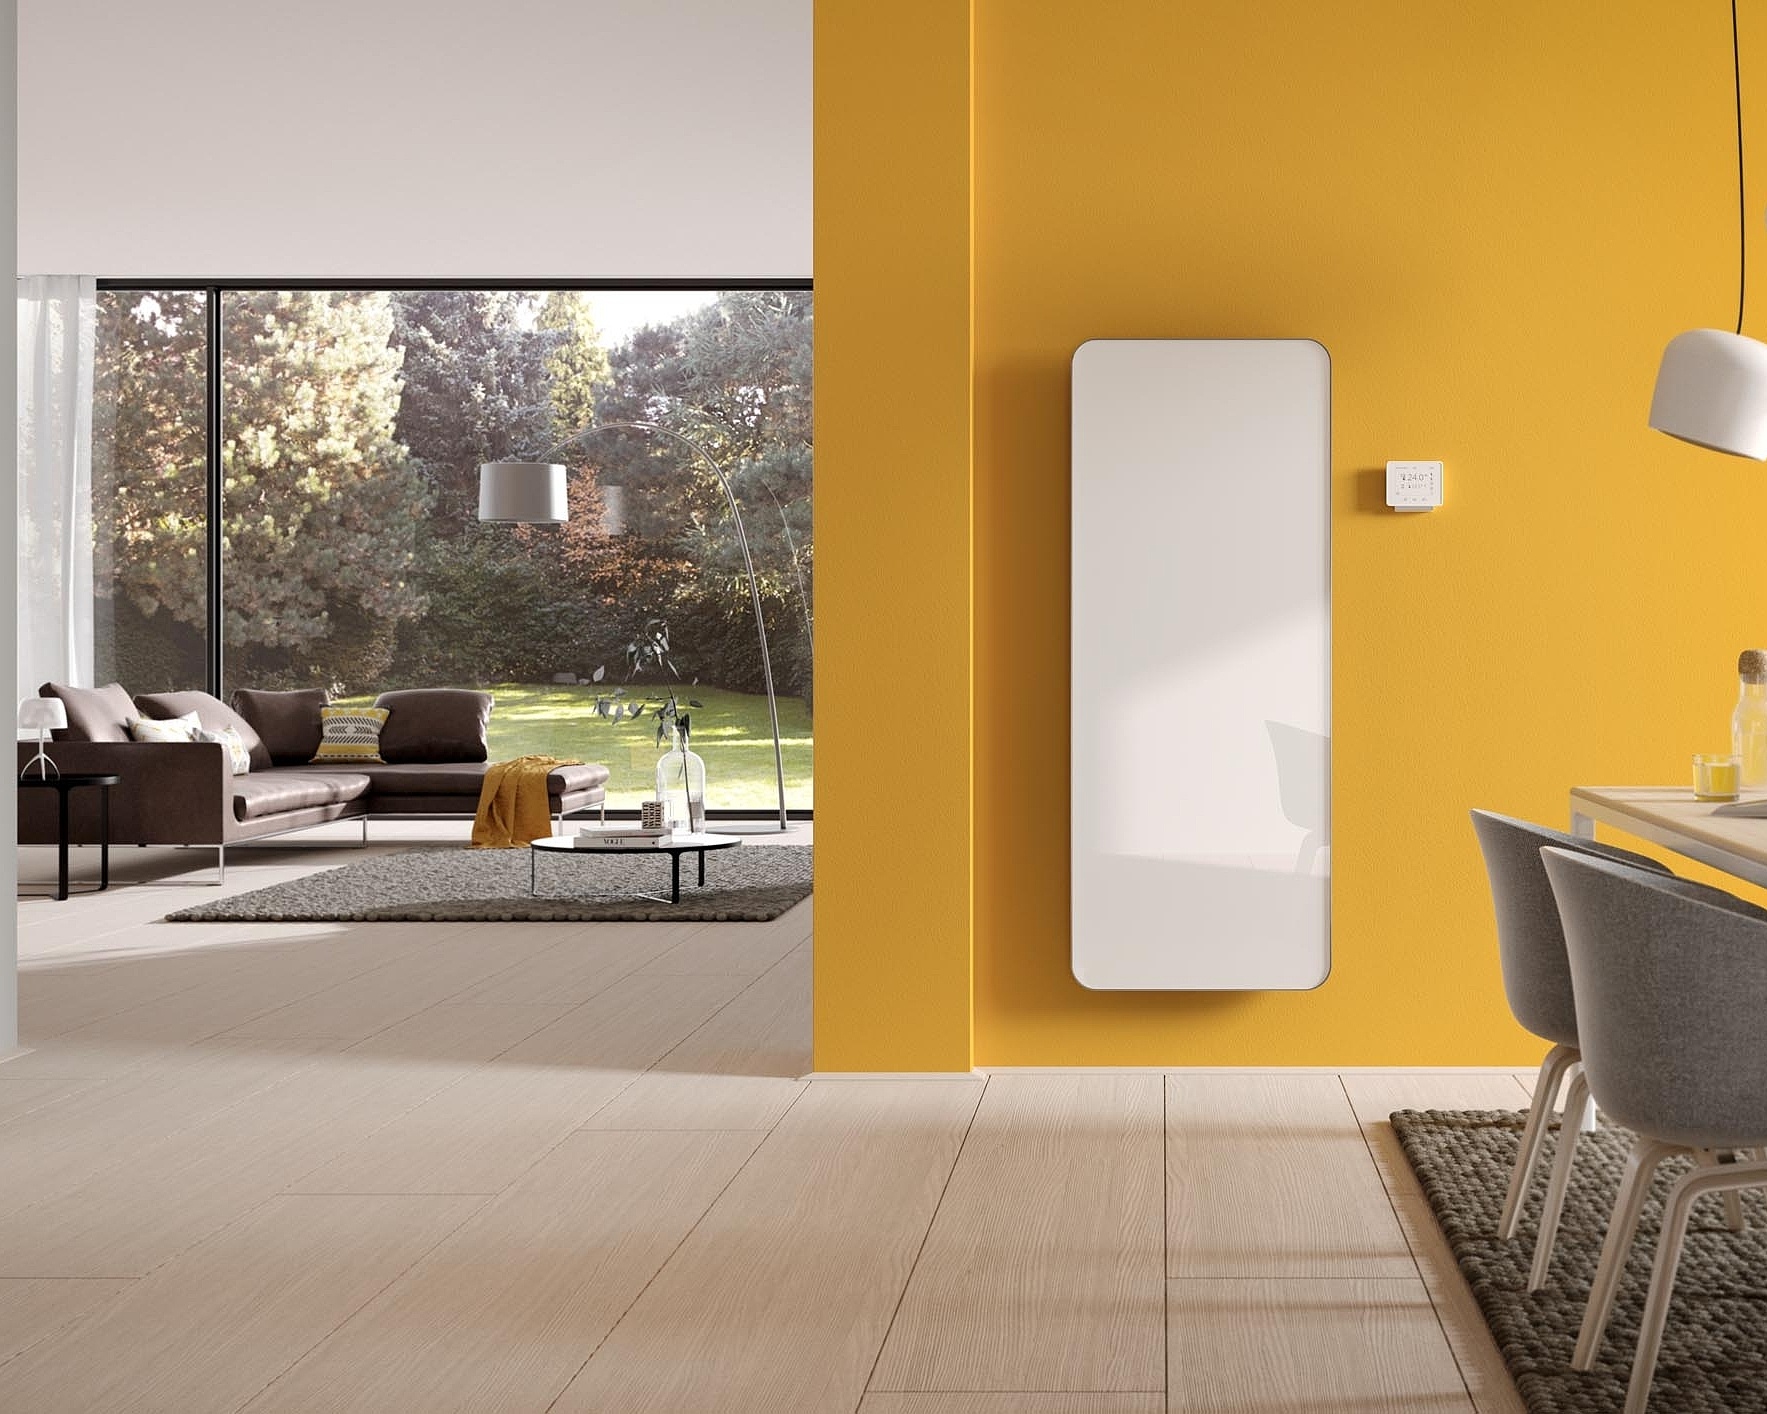 Kermi Elveo design and bathroom radiators – infrared radiators with all-electric operation.